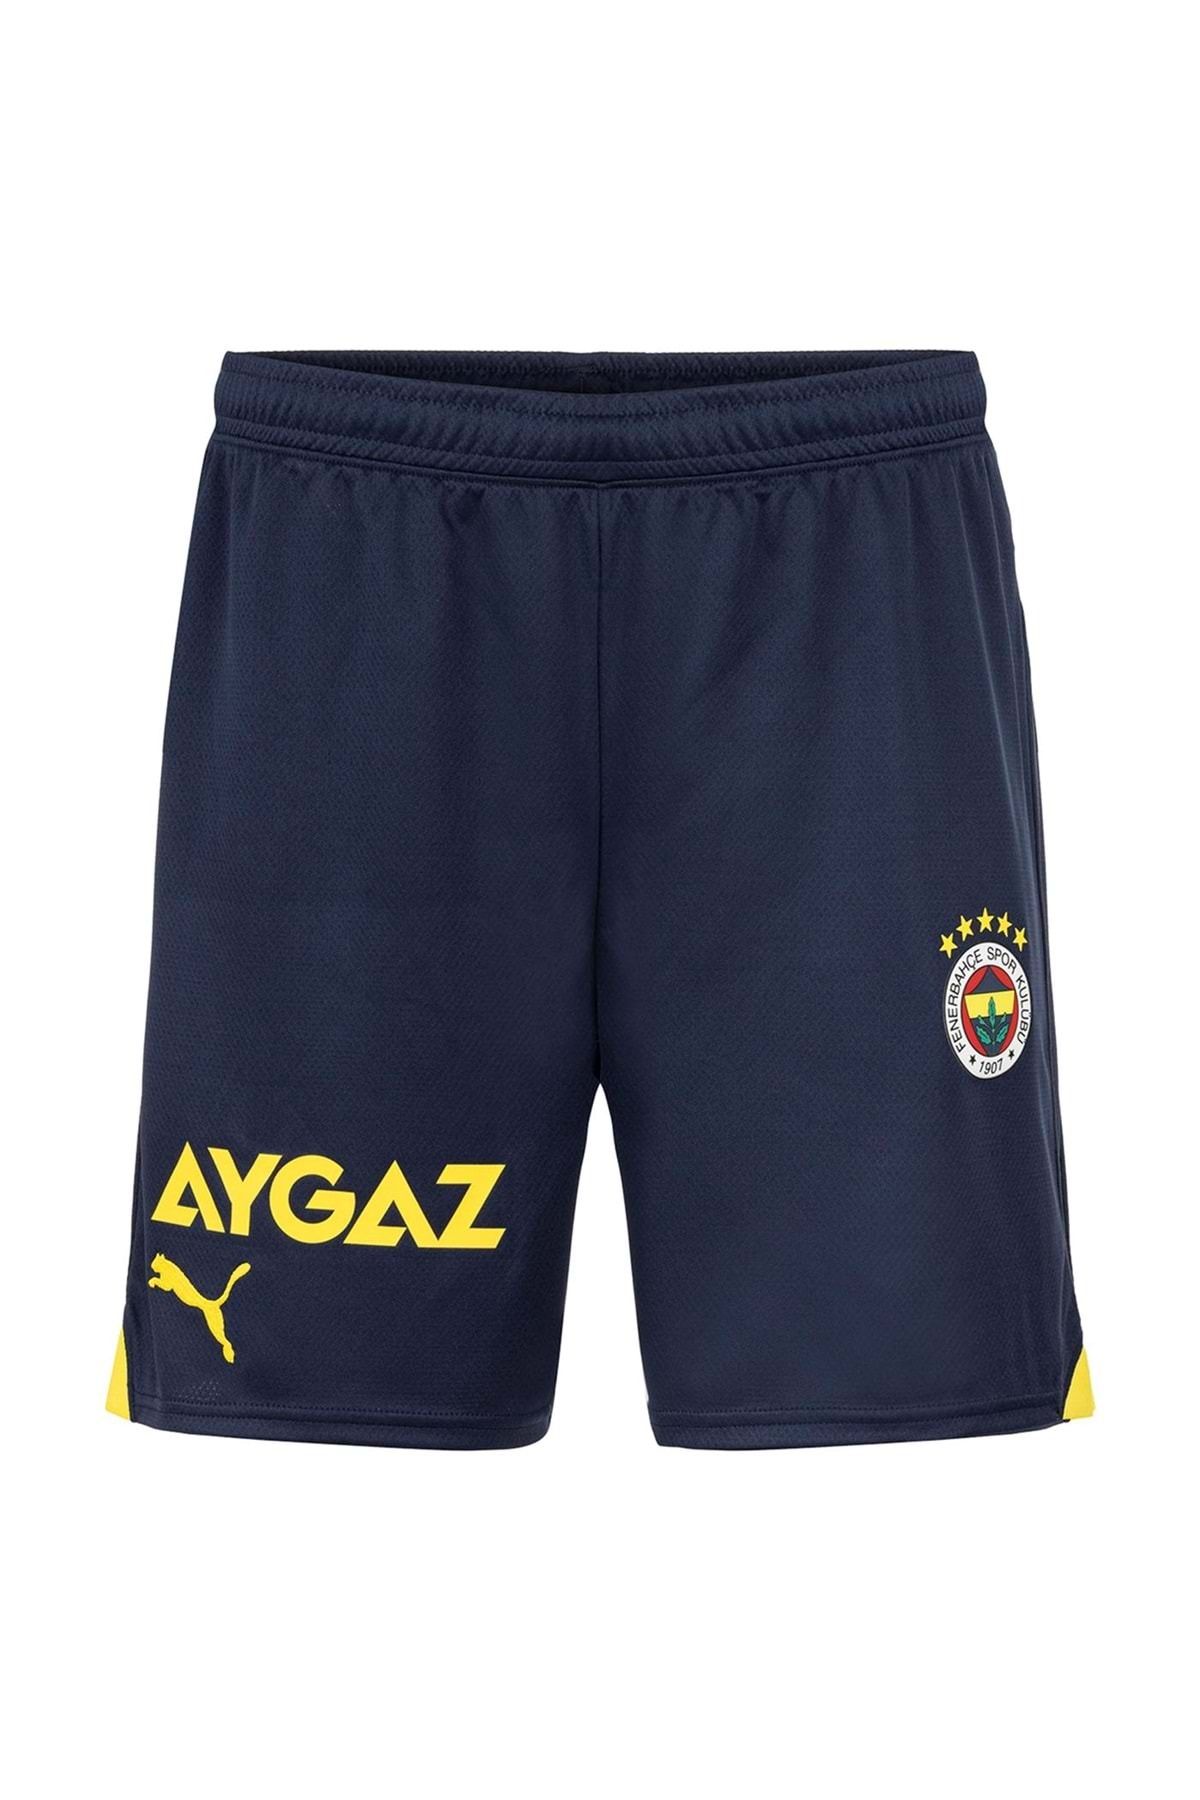 Fenerbahçe Shorts 772020-01 23/24 Futbol Şortu Lacivert